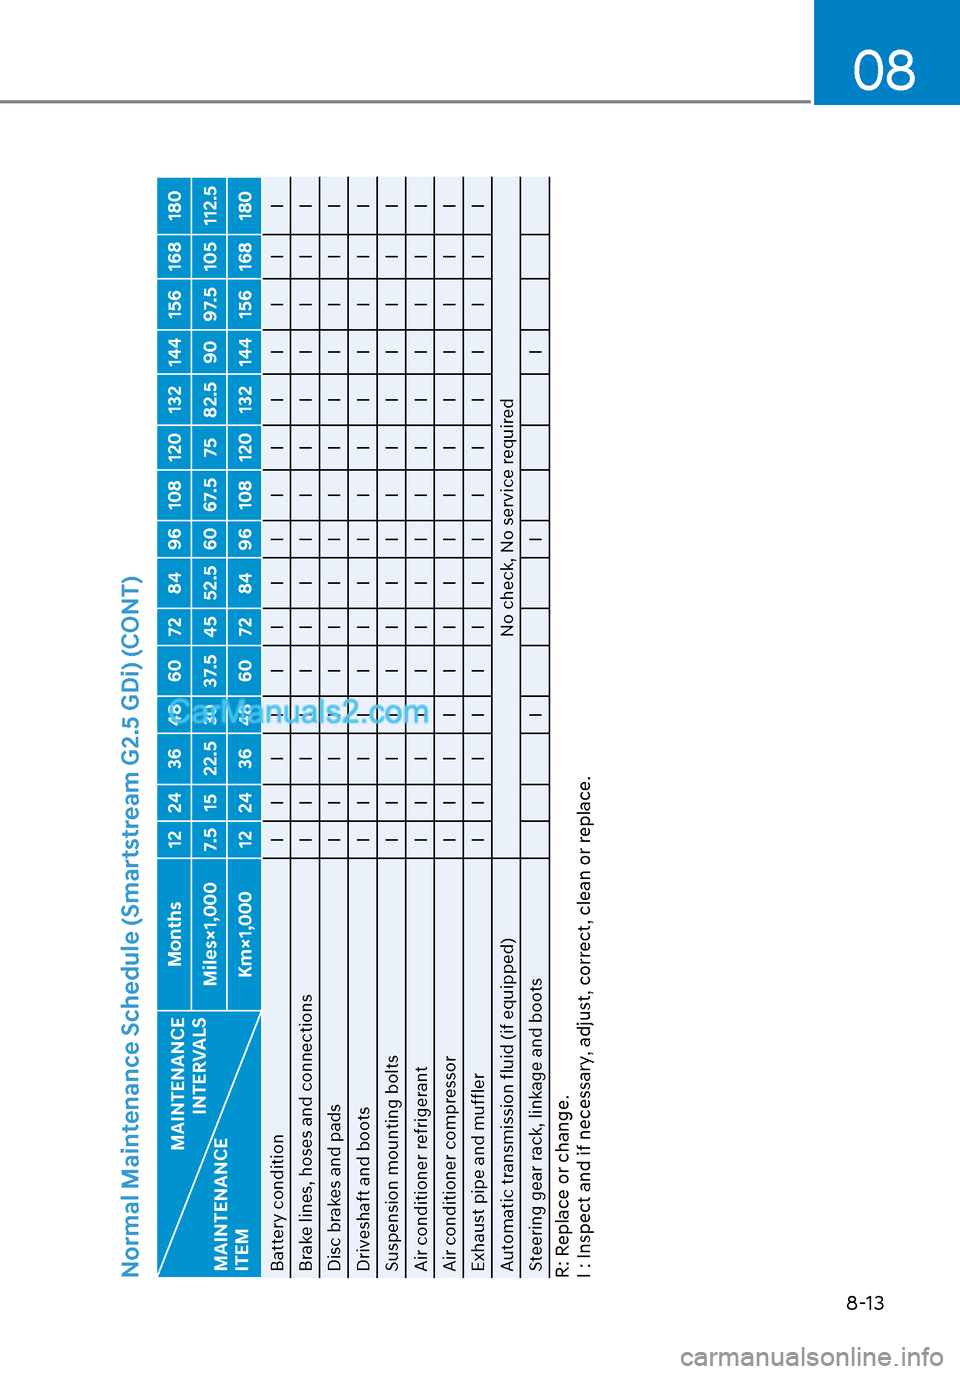 Hyundai Sonata 2020  Owners Manual 08
8-13
Normal Maintenance Schedule (Smartstream G2.5 GDi) (CONT)
MAINTENANCE INTERVALS
MAINTENANCE 
ITEM Months 12 24 36 48 60 72 84 96 108 120 132 144 156 168 180
Miles×1,000 7.5 15 22.5 30 37.5 45